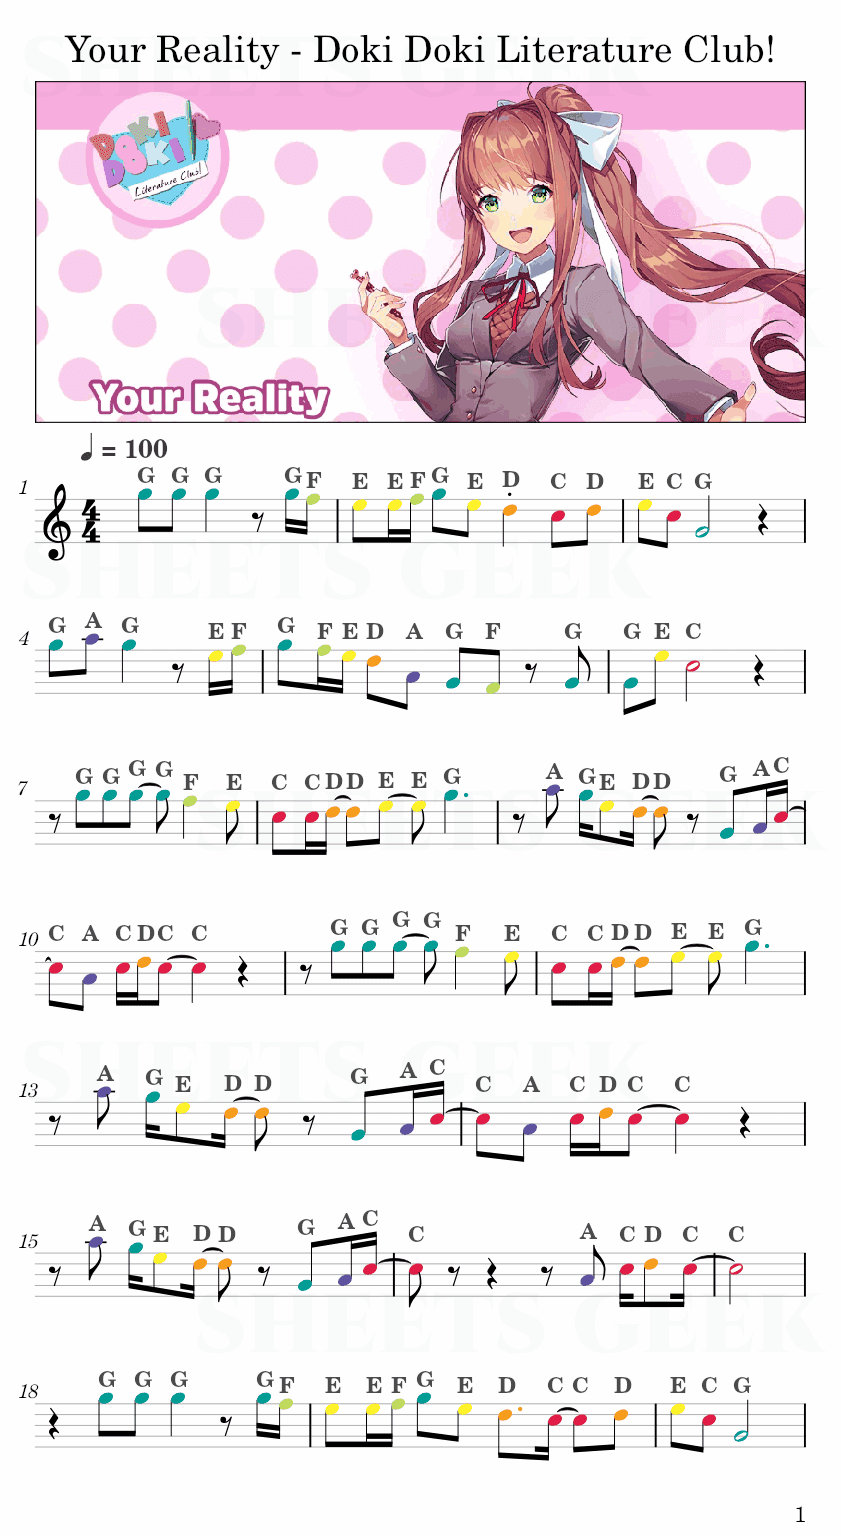 Your Reality - Doki Doki Literature Club! Easy Sheets Music Free for piano, keyboard, flute, violin, sax, celllo 1